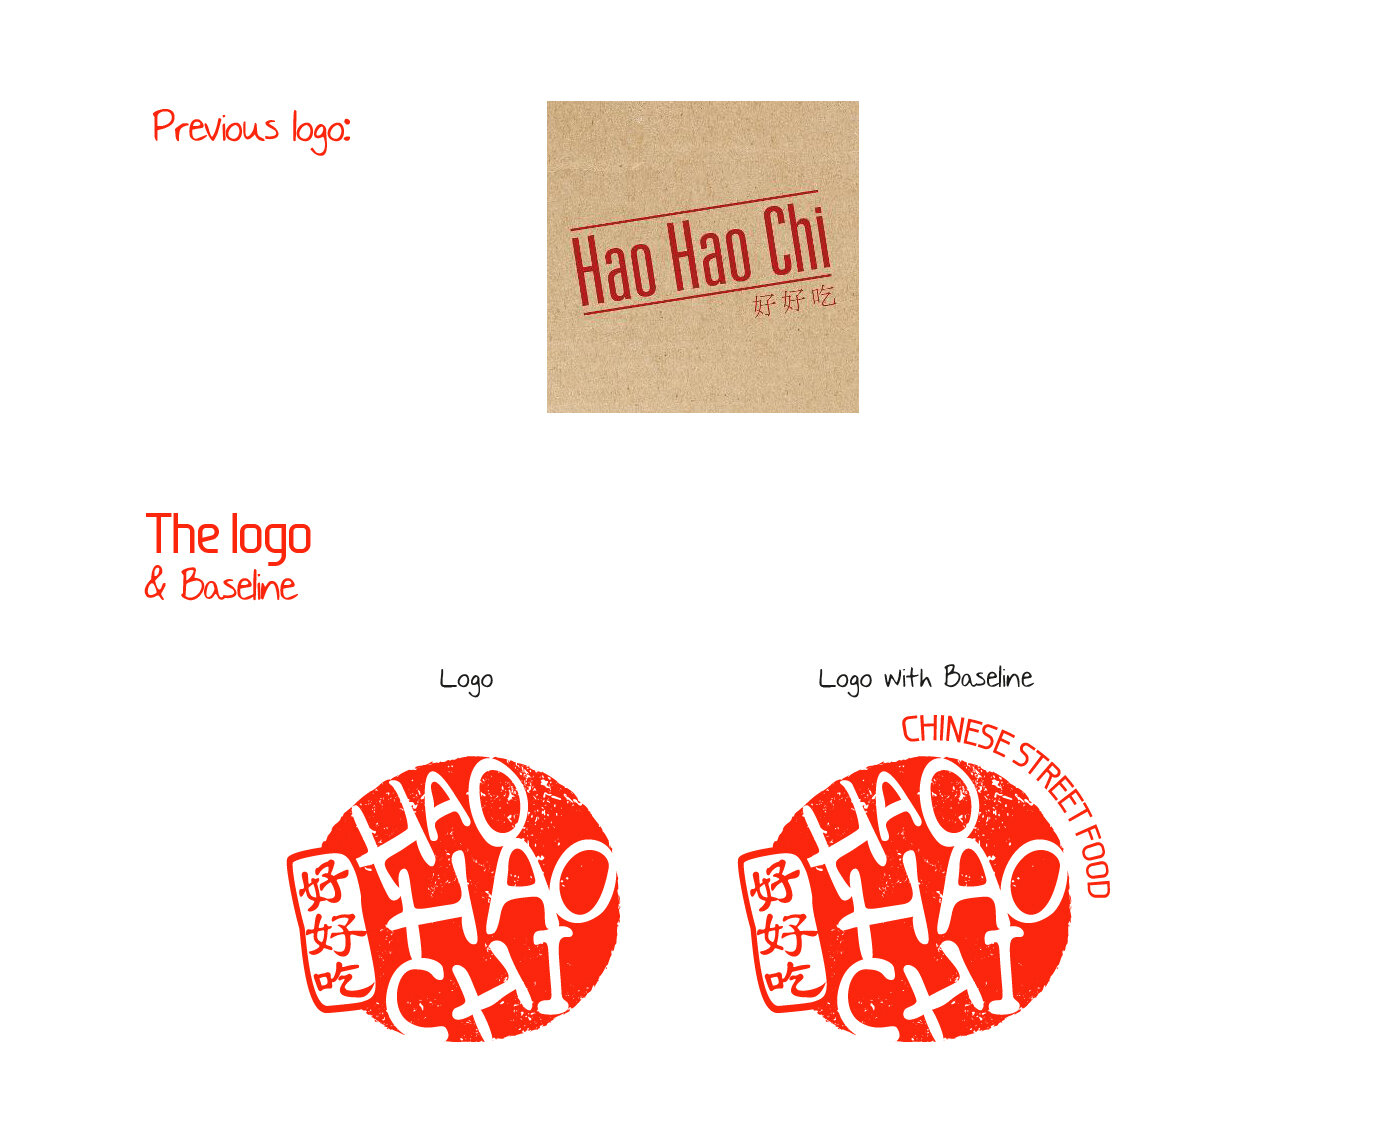 Refonte du logo Hao Hao Chi